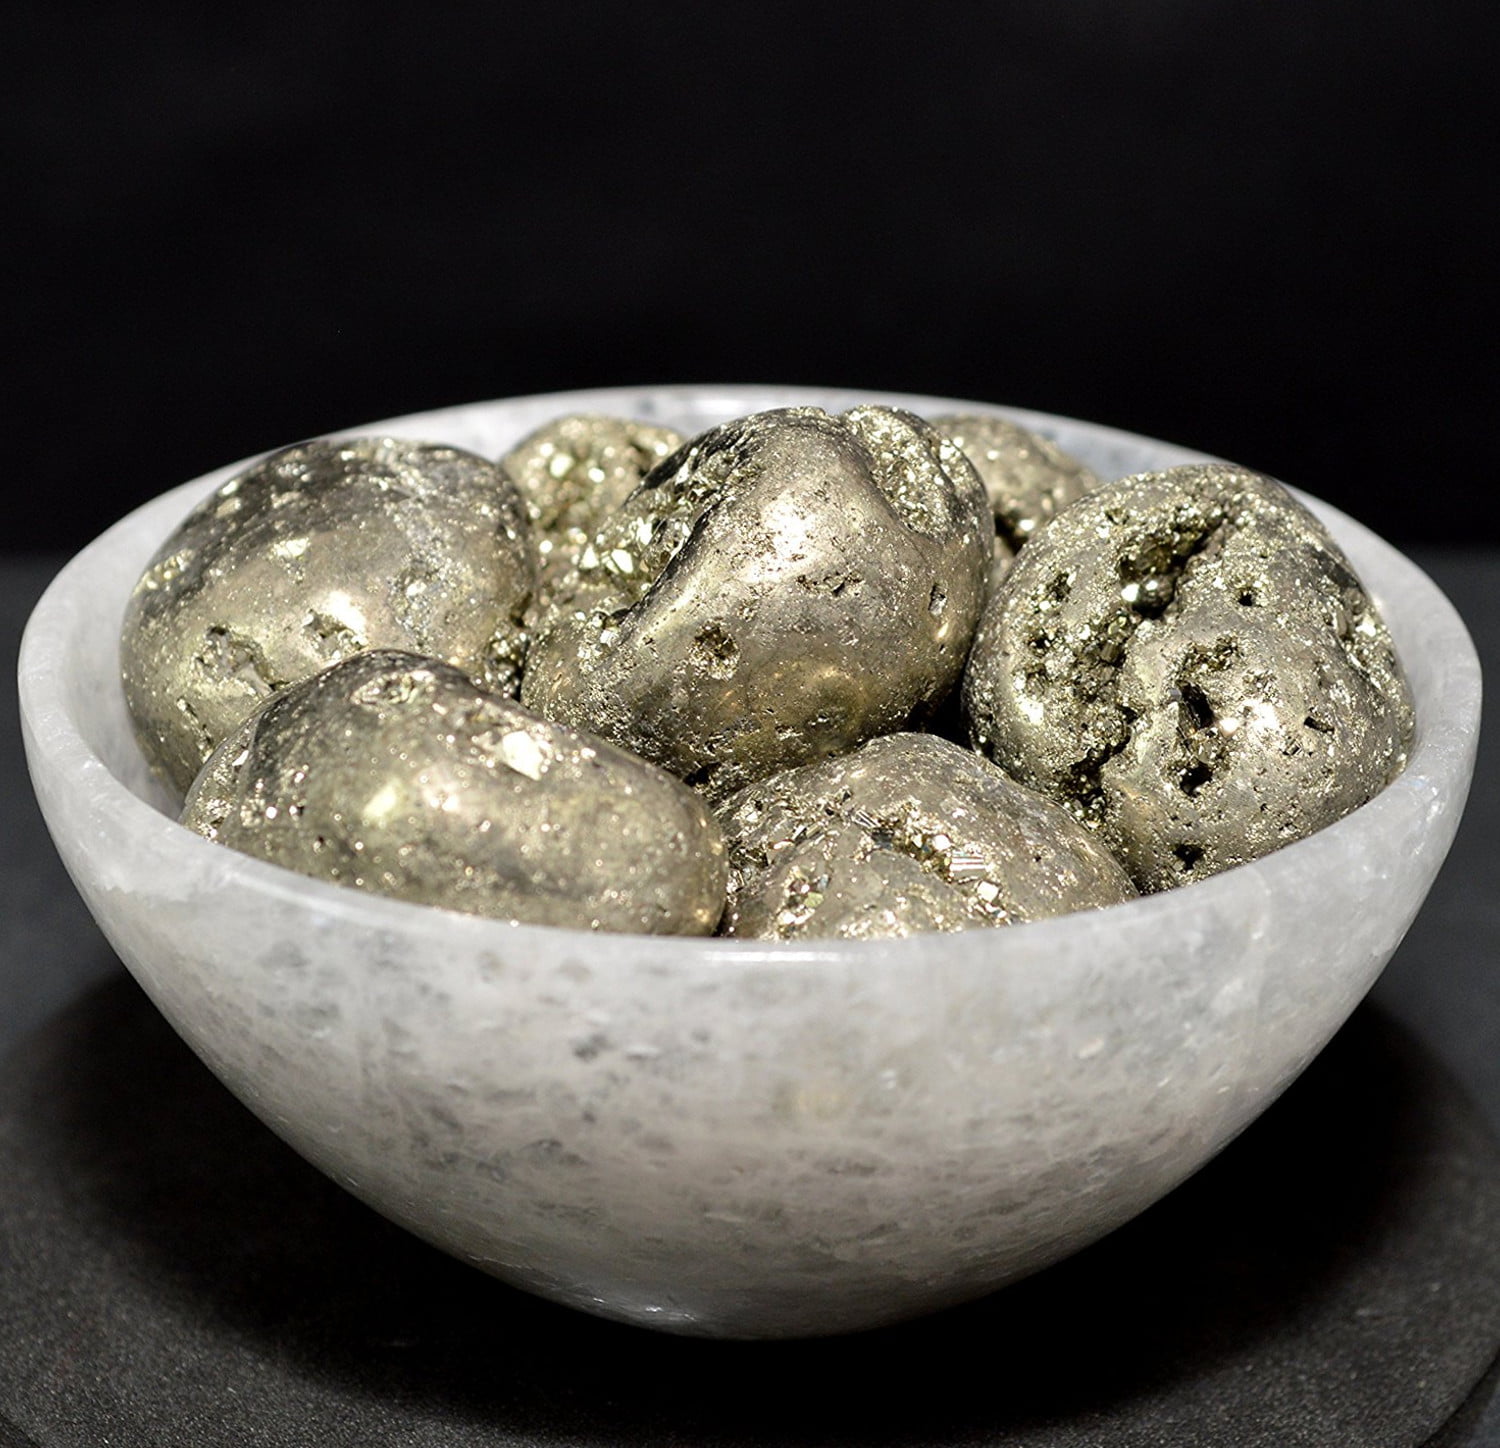 10PCS Natural Black Onyx Pebbles Polished Cabochon Gemstone Crystal Mineral Specimen Cabs from Peru 